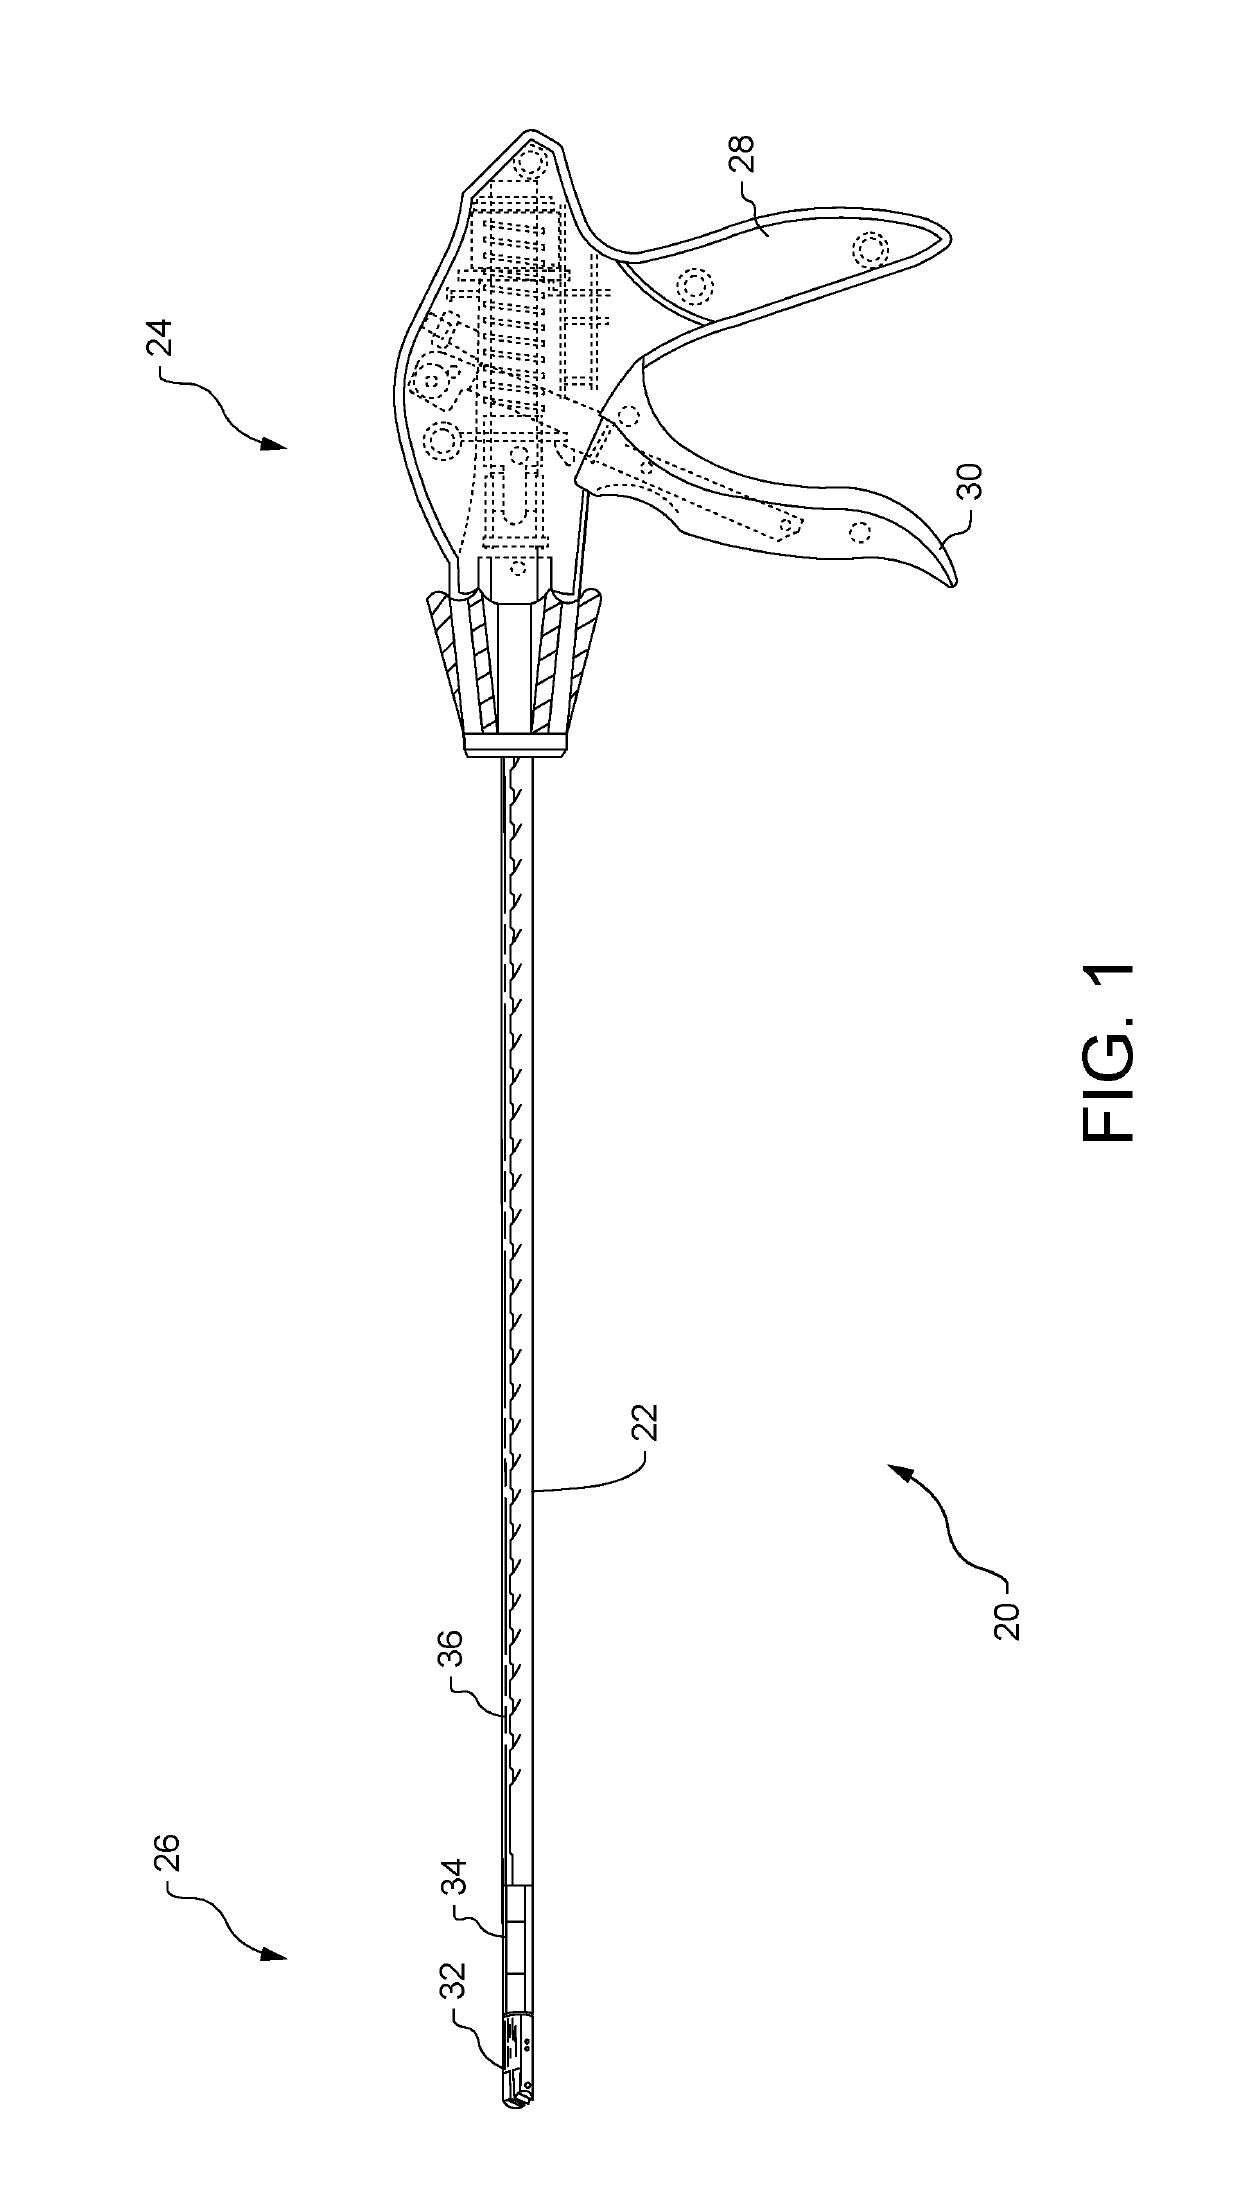 Laparoscopic suture device with impulse deployment